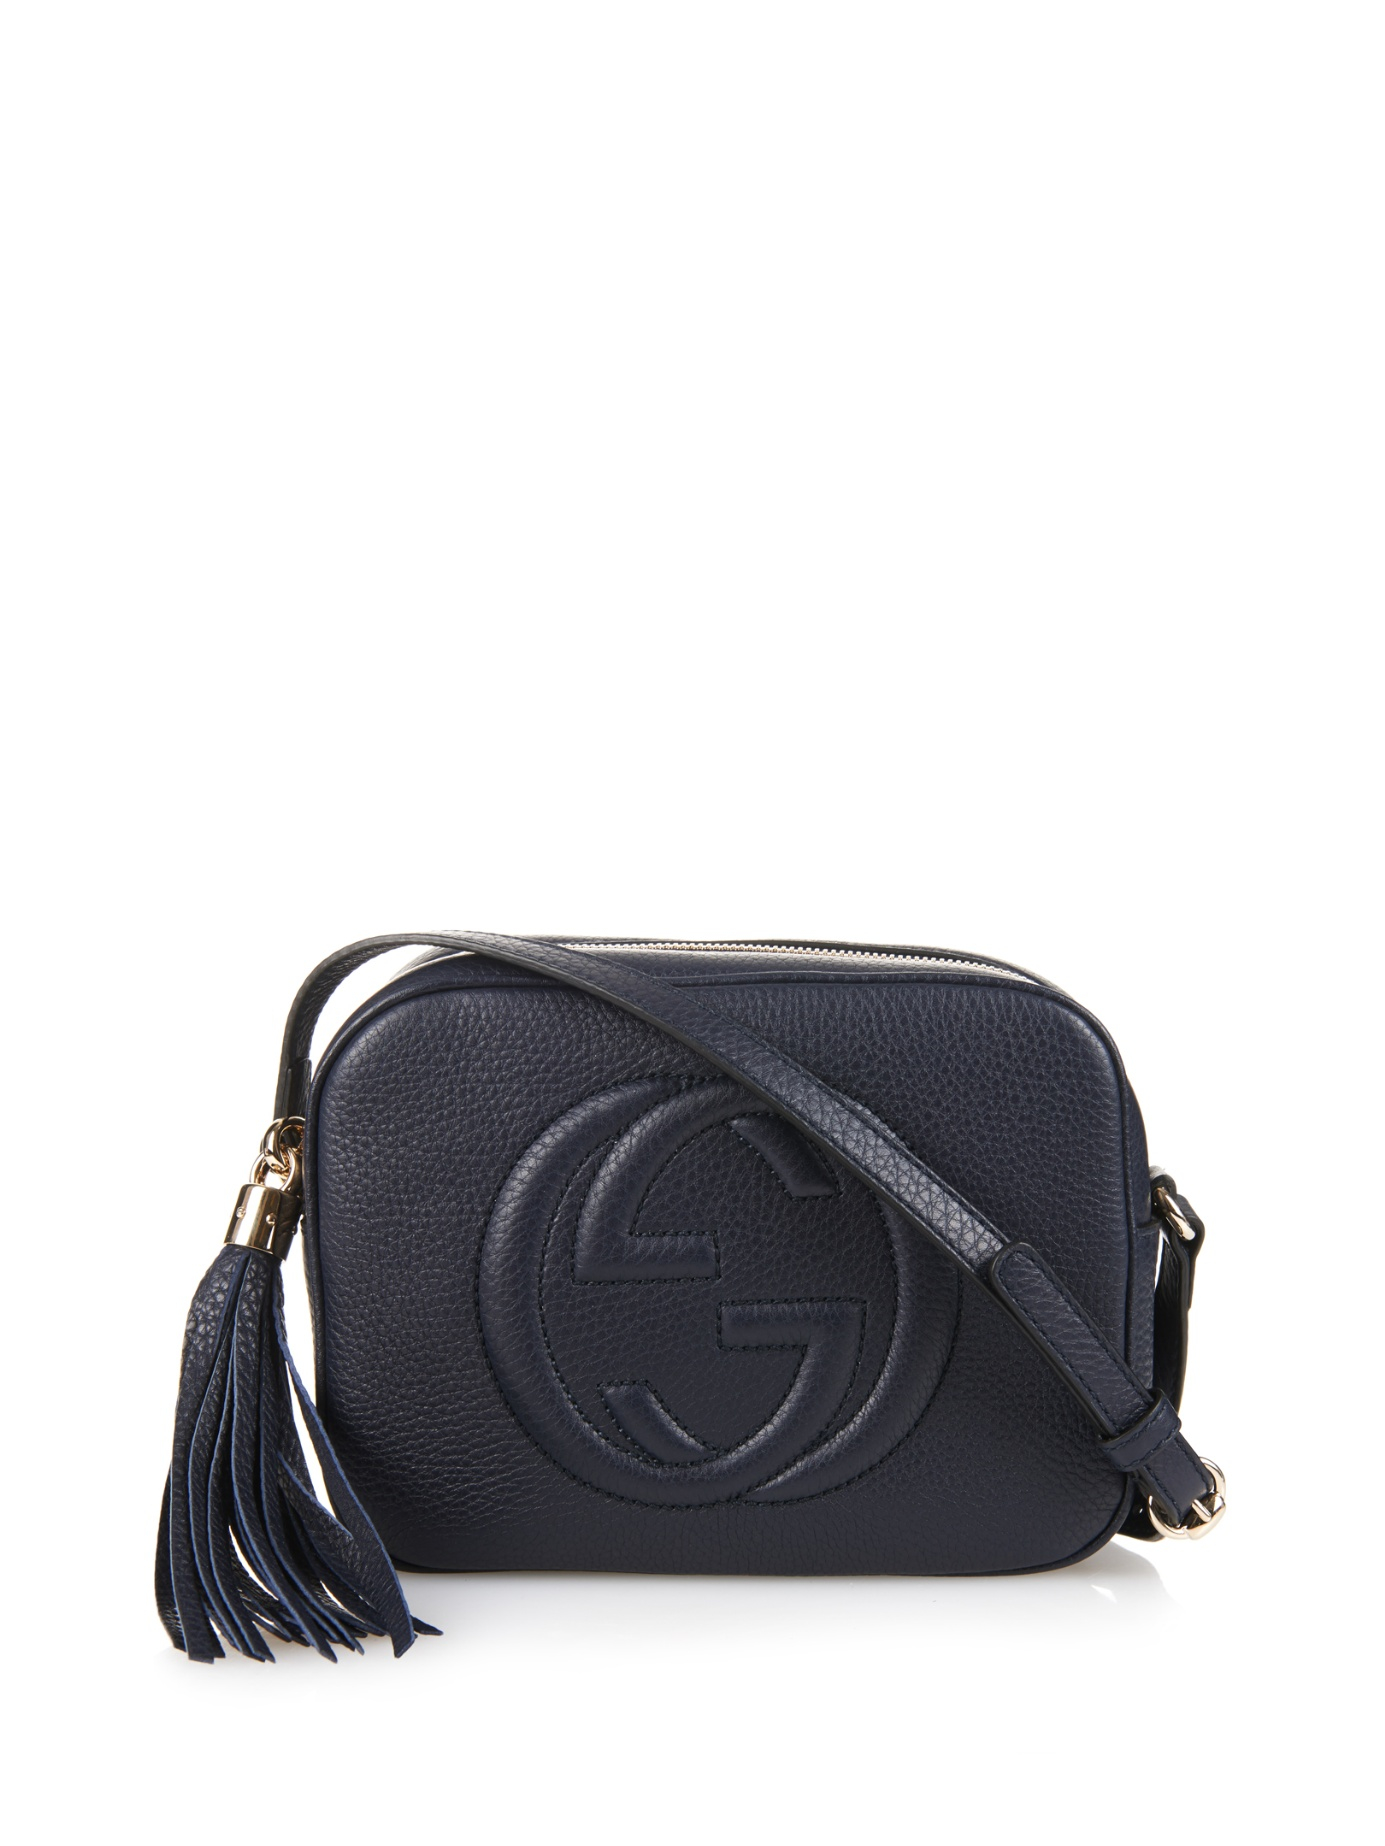 Black Gucci Cross Body Bag | semashow.com